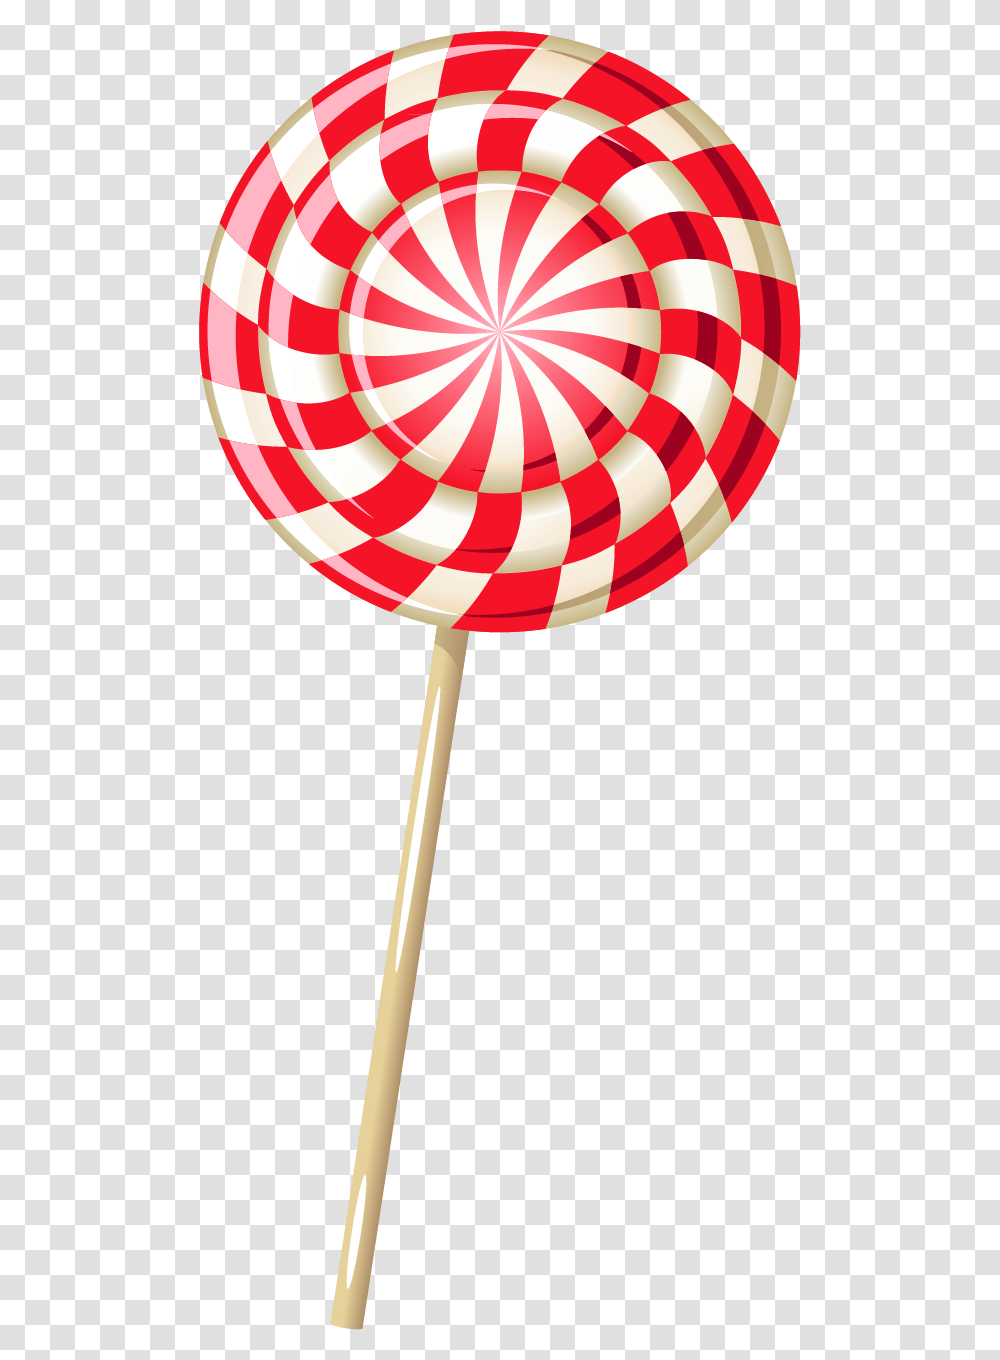 Lollipop Single Large Background Lollipop, Food, Balloon, Candy, Lamp Transparent Png